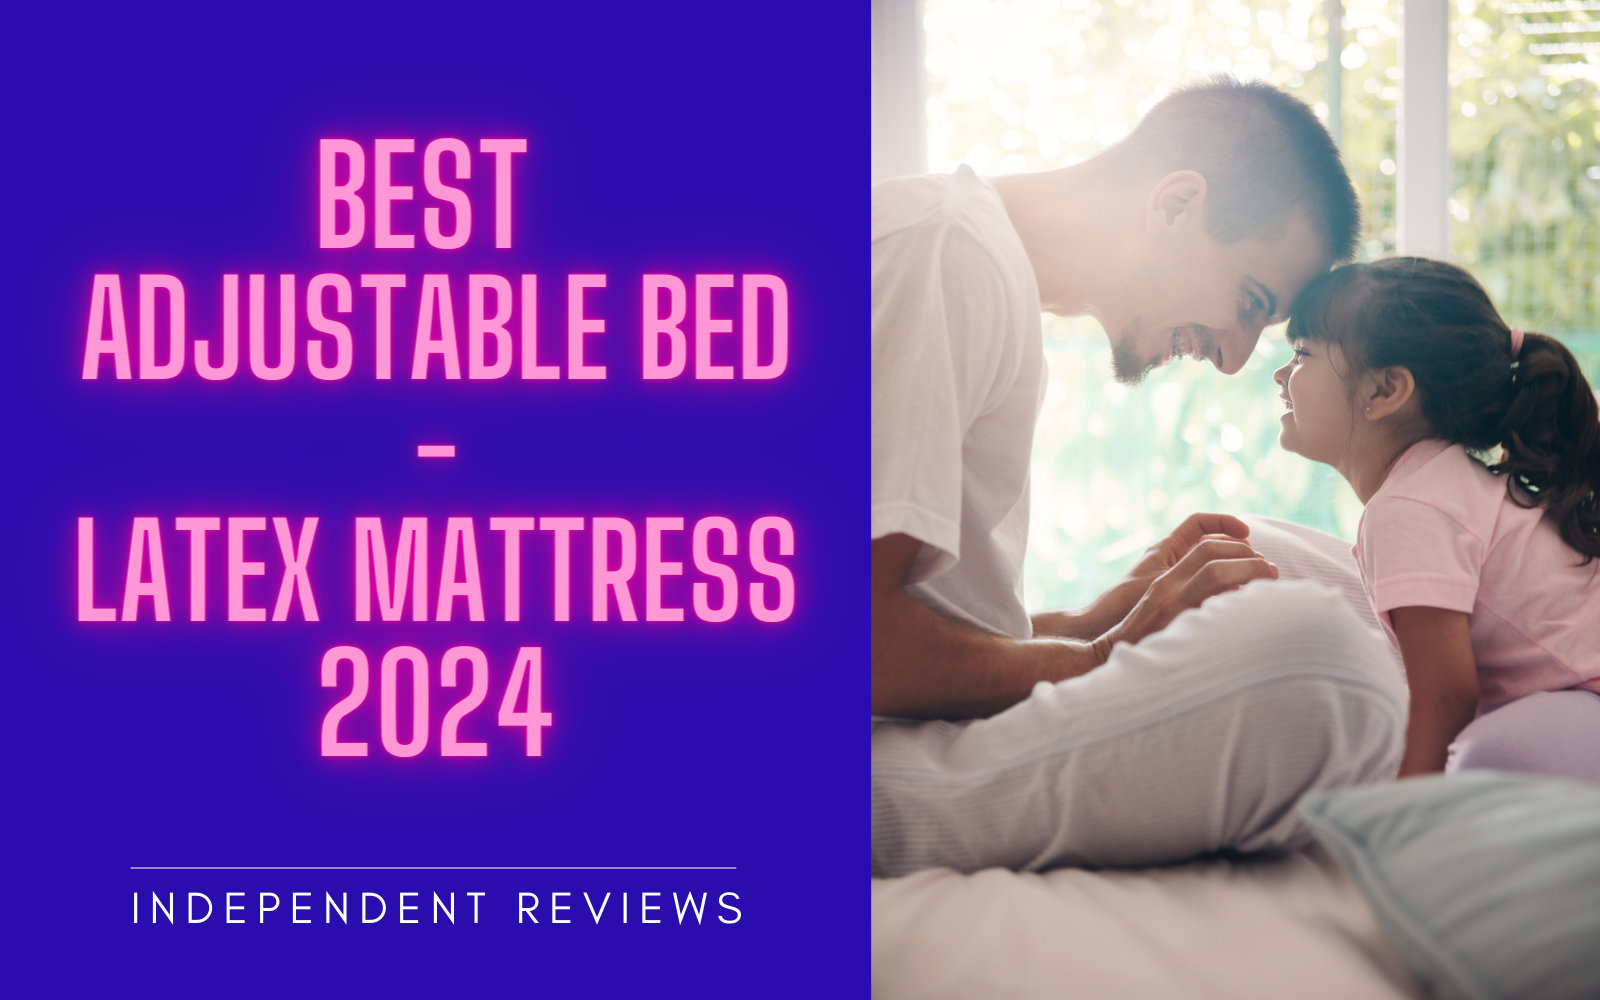 best adjustable bed latex mattress 2024 pop up image